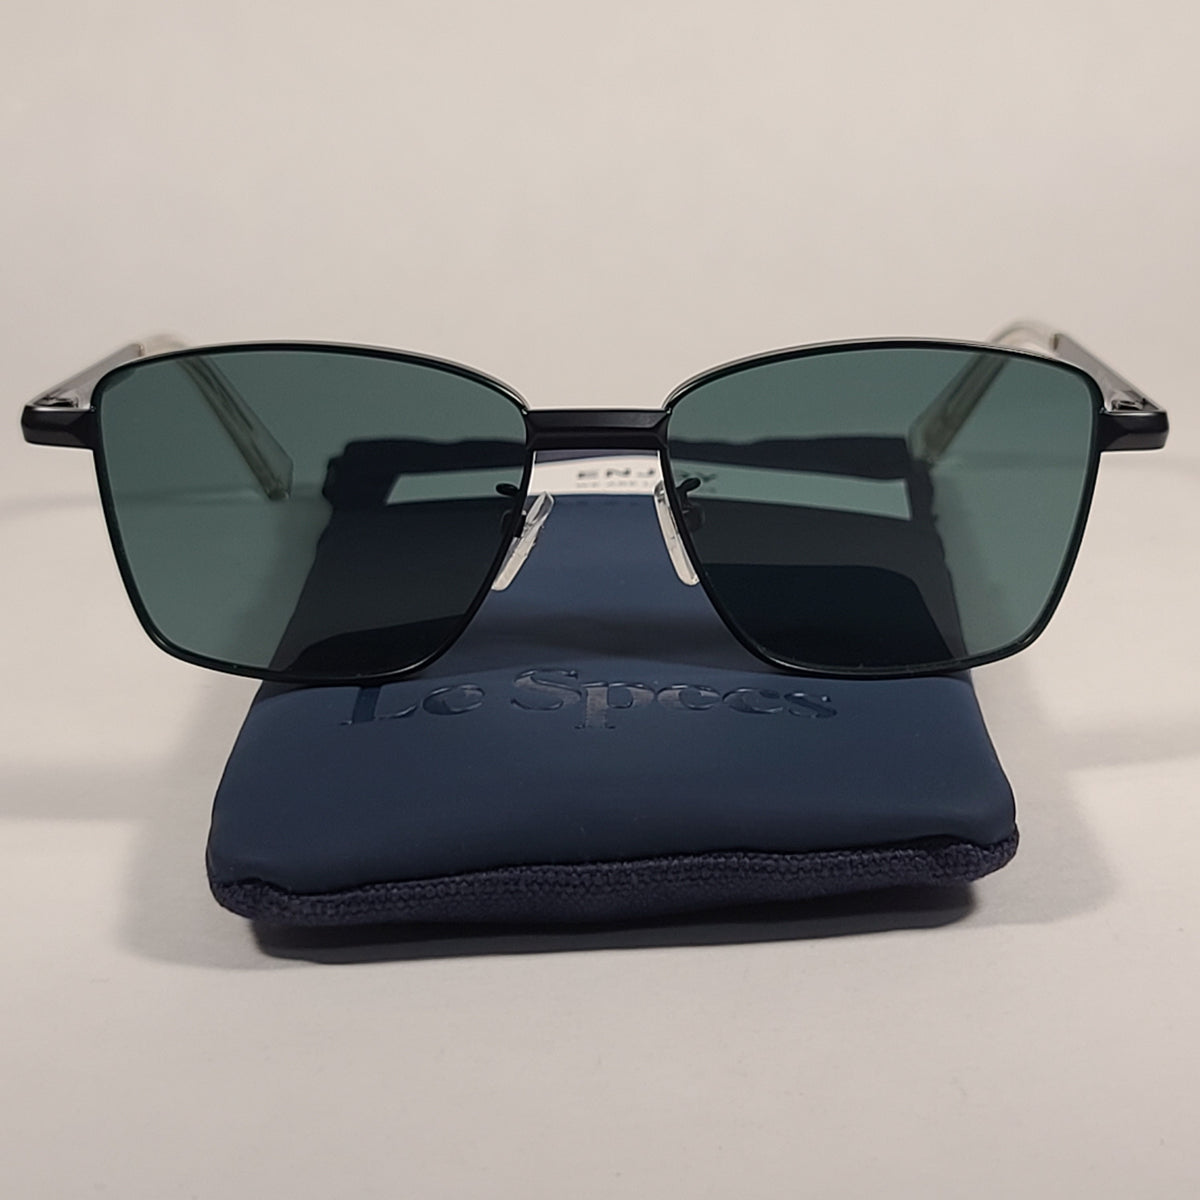 Le Specs Supastar Square Sunglasses Matte Black Frame Green